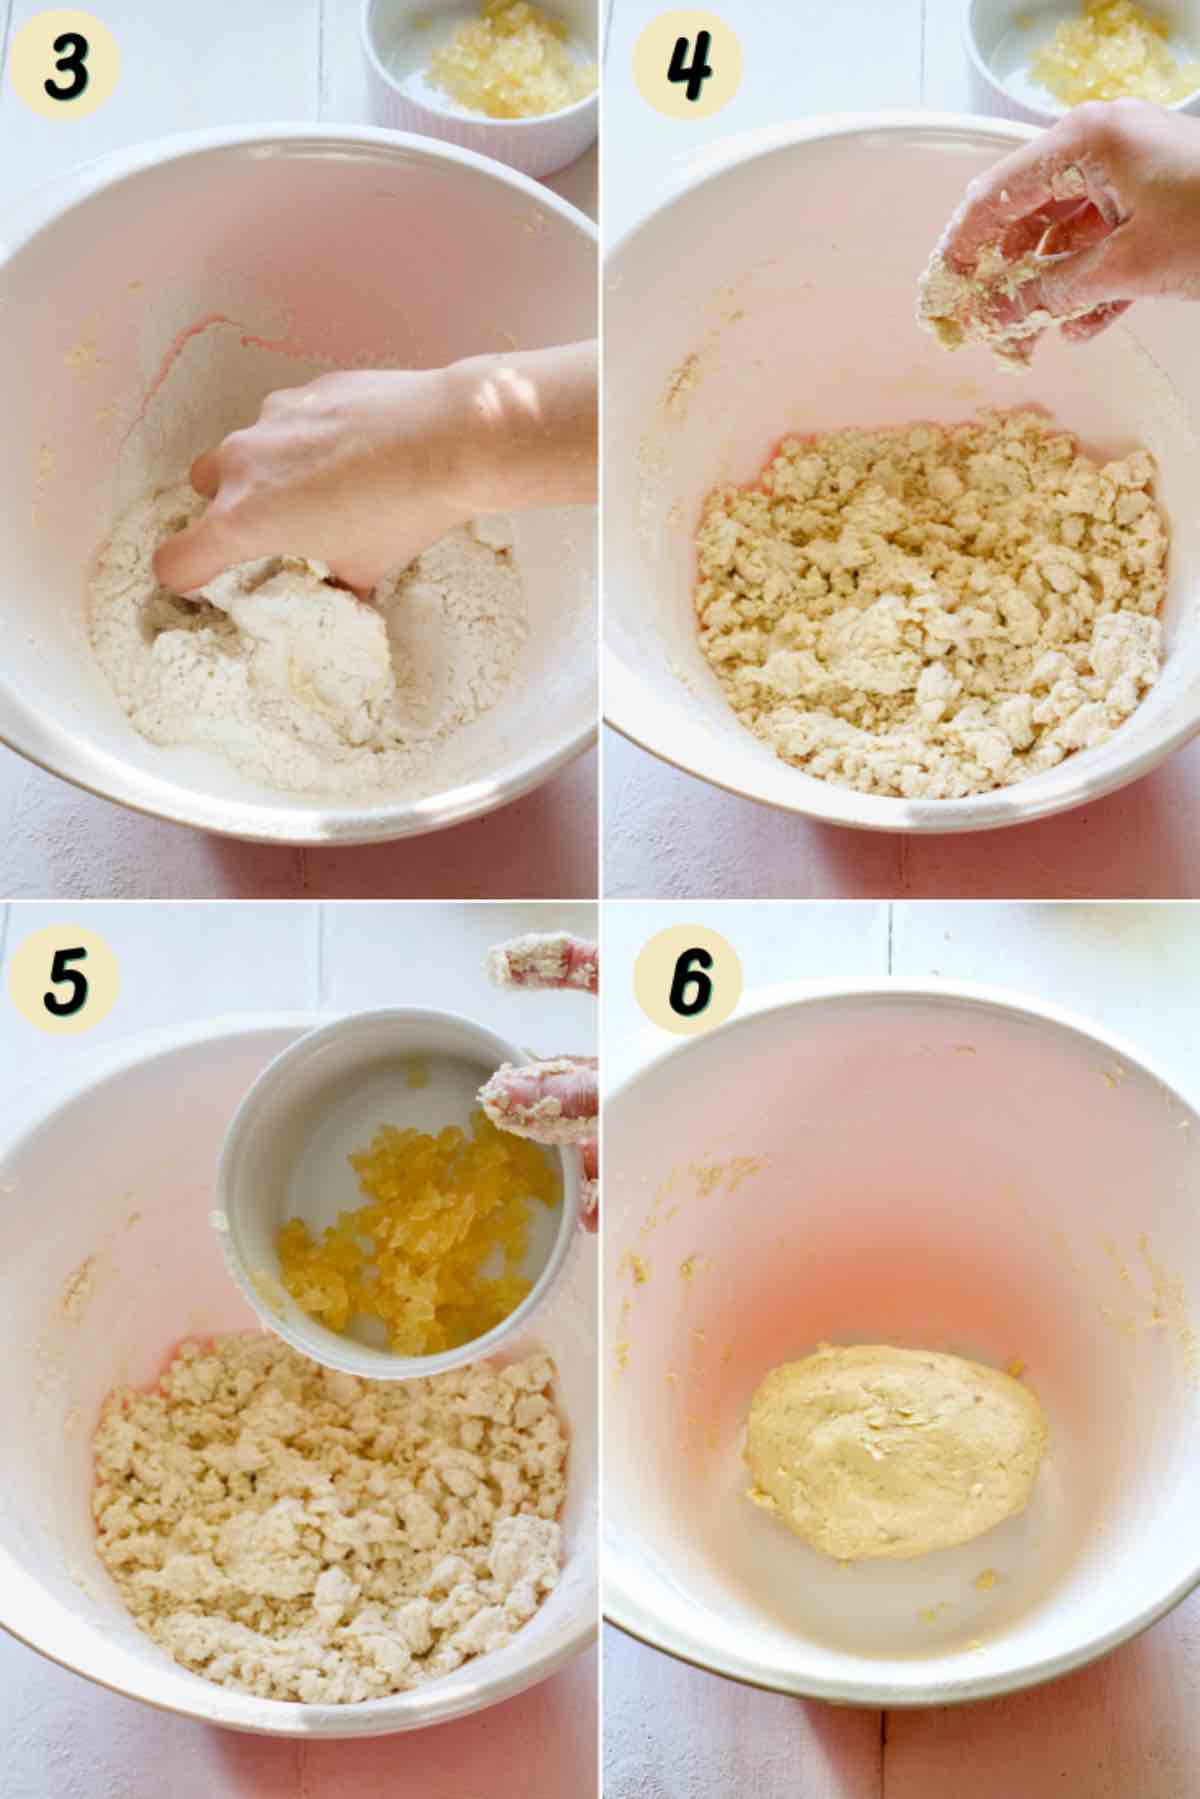 Process of making dough.